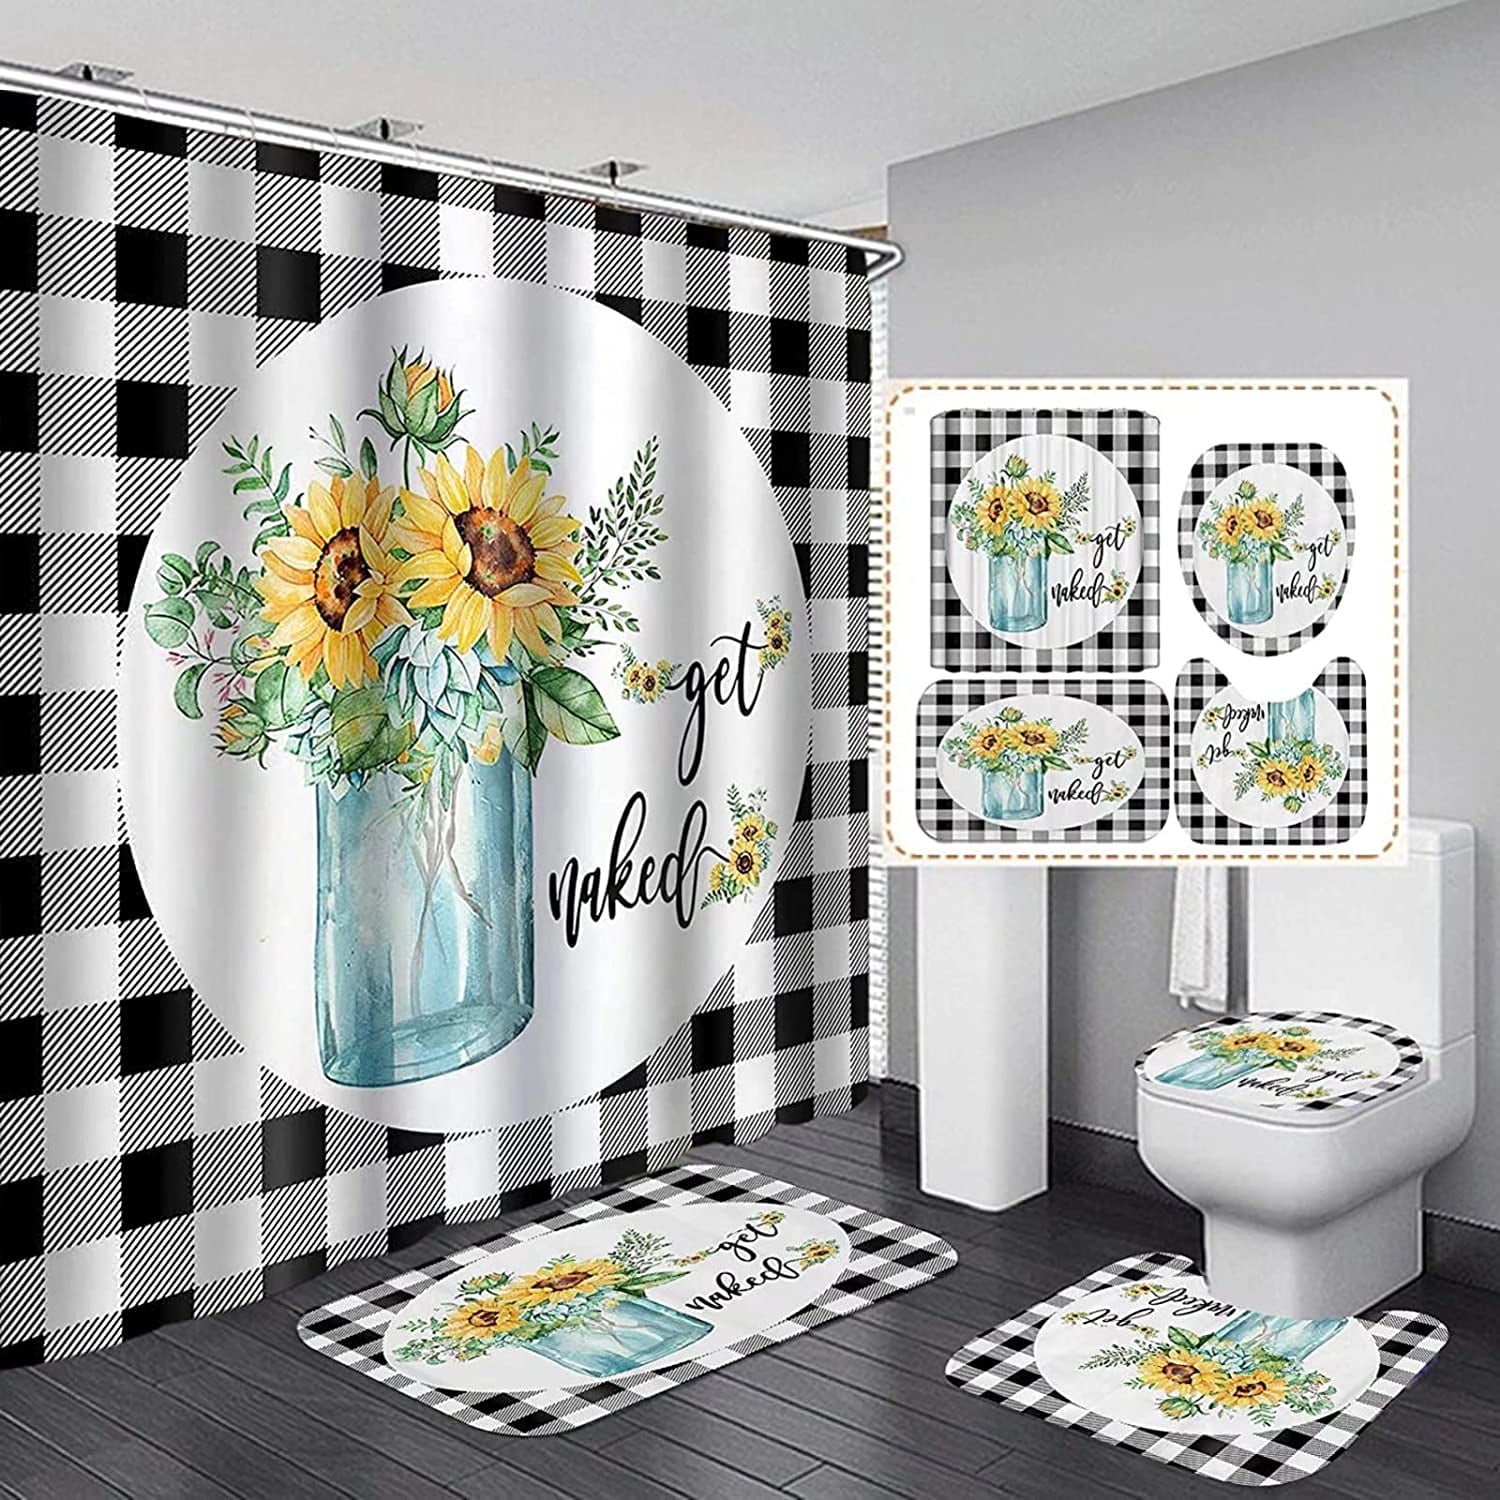 Sunflower Bubbles Shower Curtain Sets Get Naked Black Background Bathroom Decor 